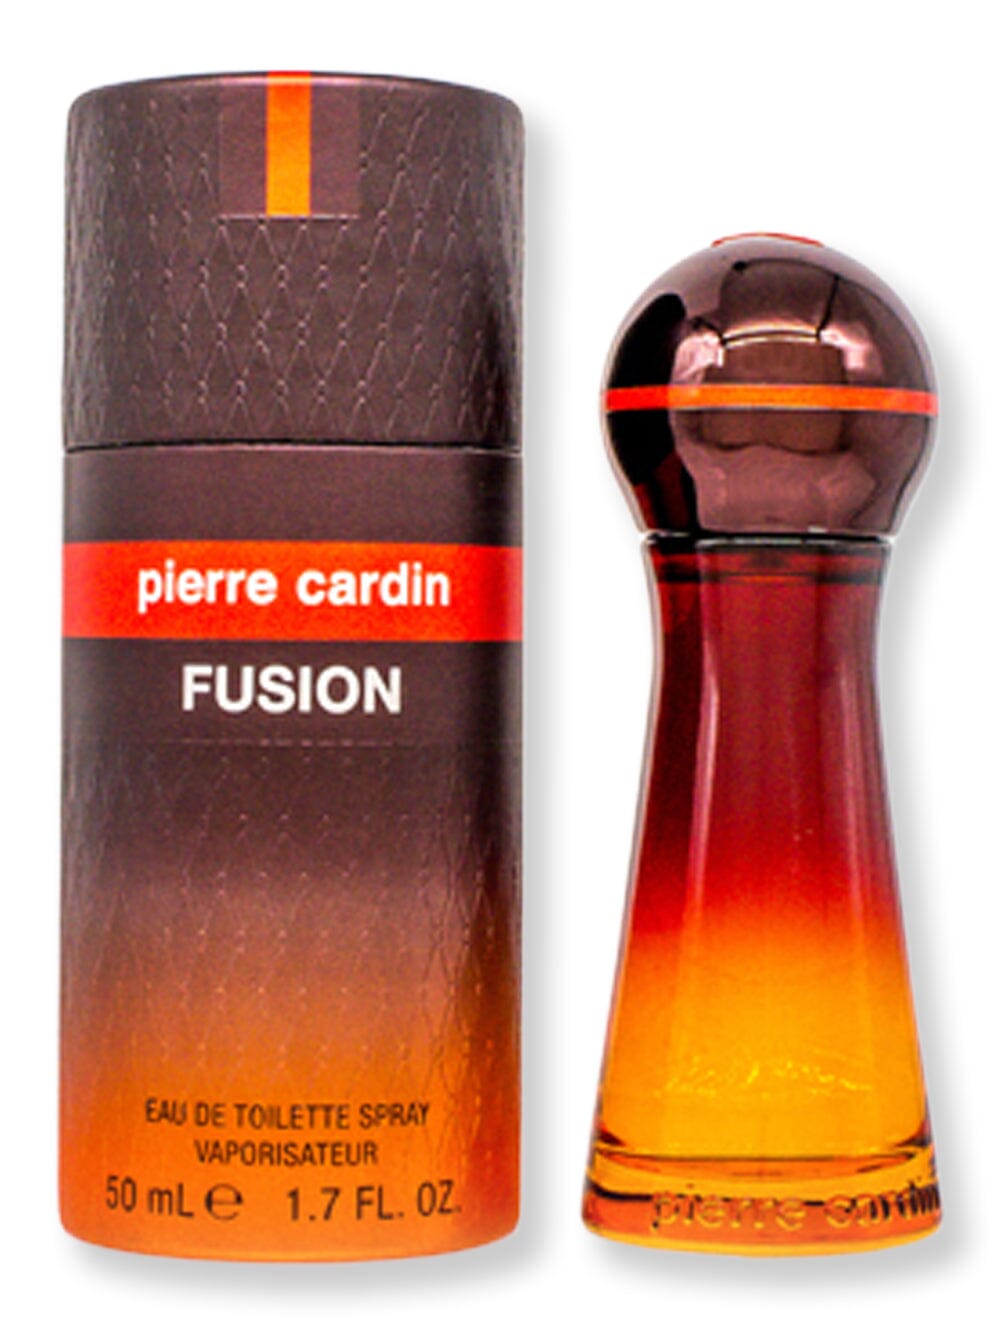 Pierre Cardin Pierre Cardin Fusion EDT Spray 1.7 oz50 ml Perfume 